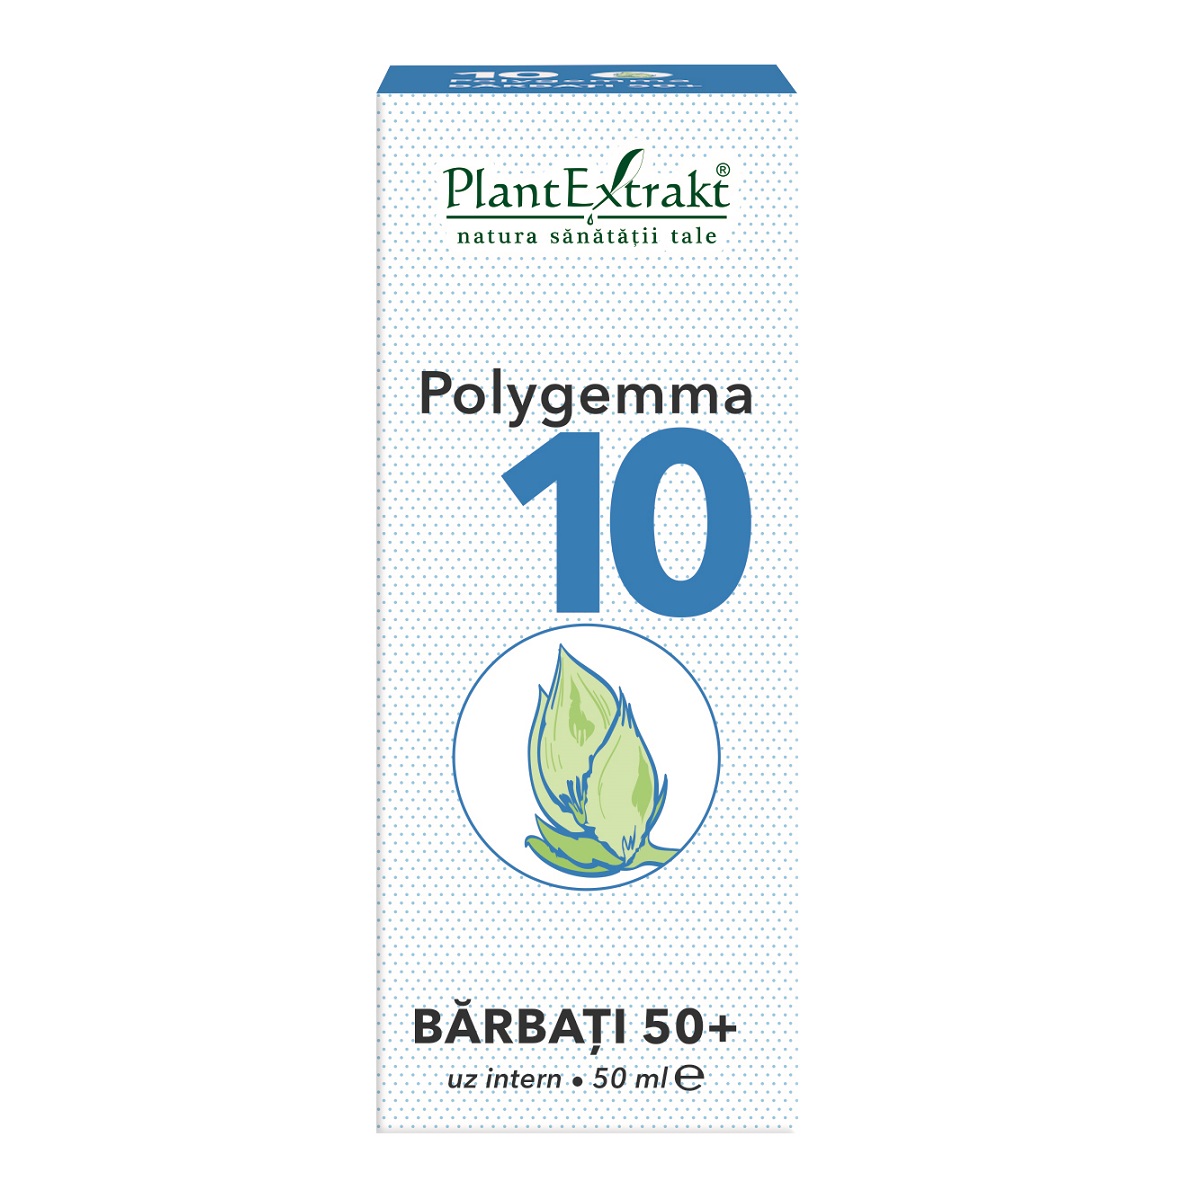 Polygemma 14 - Articulatii, detoxifiere (50 ml), Plantextrakt de la hotatelescopica.ro - Simte natura!